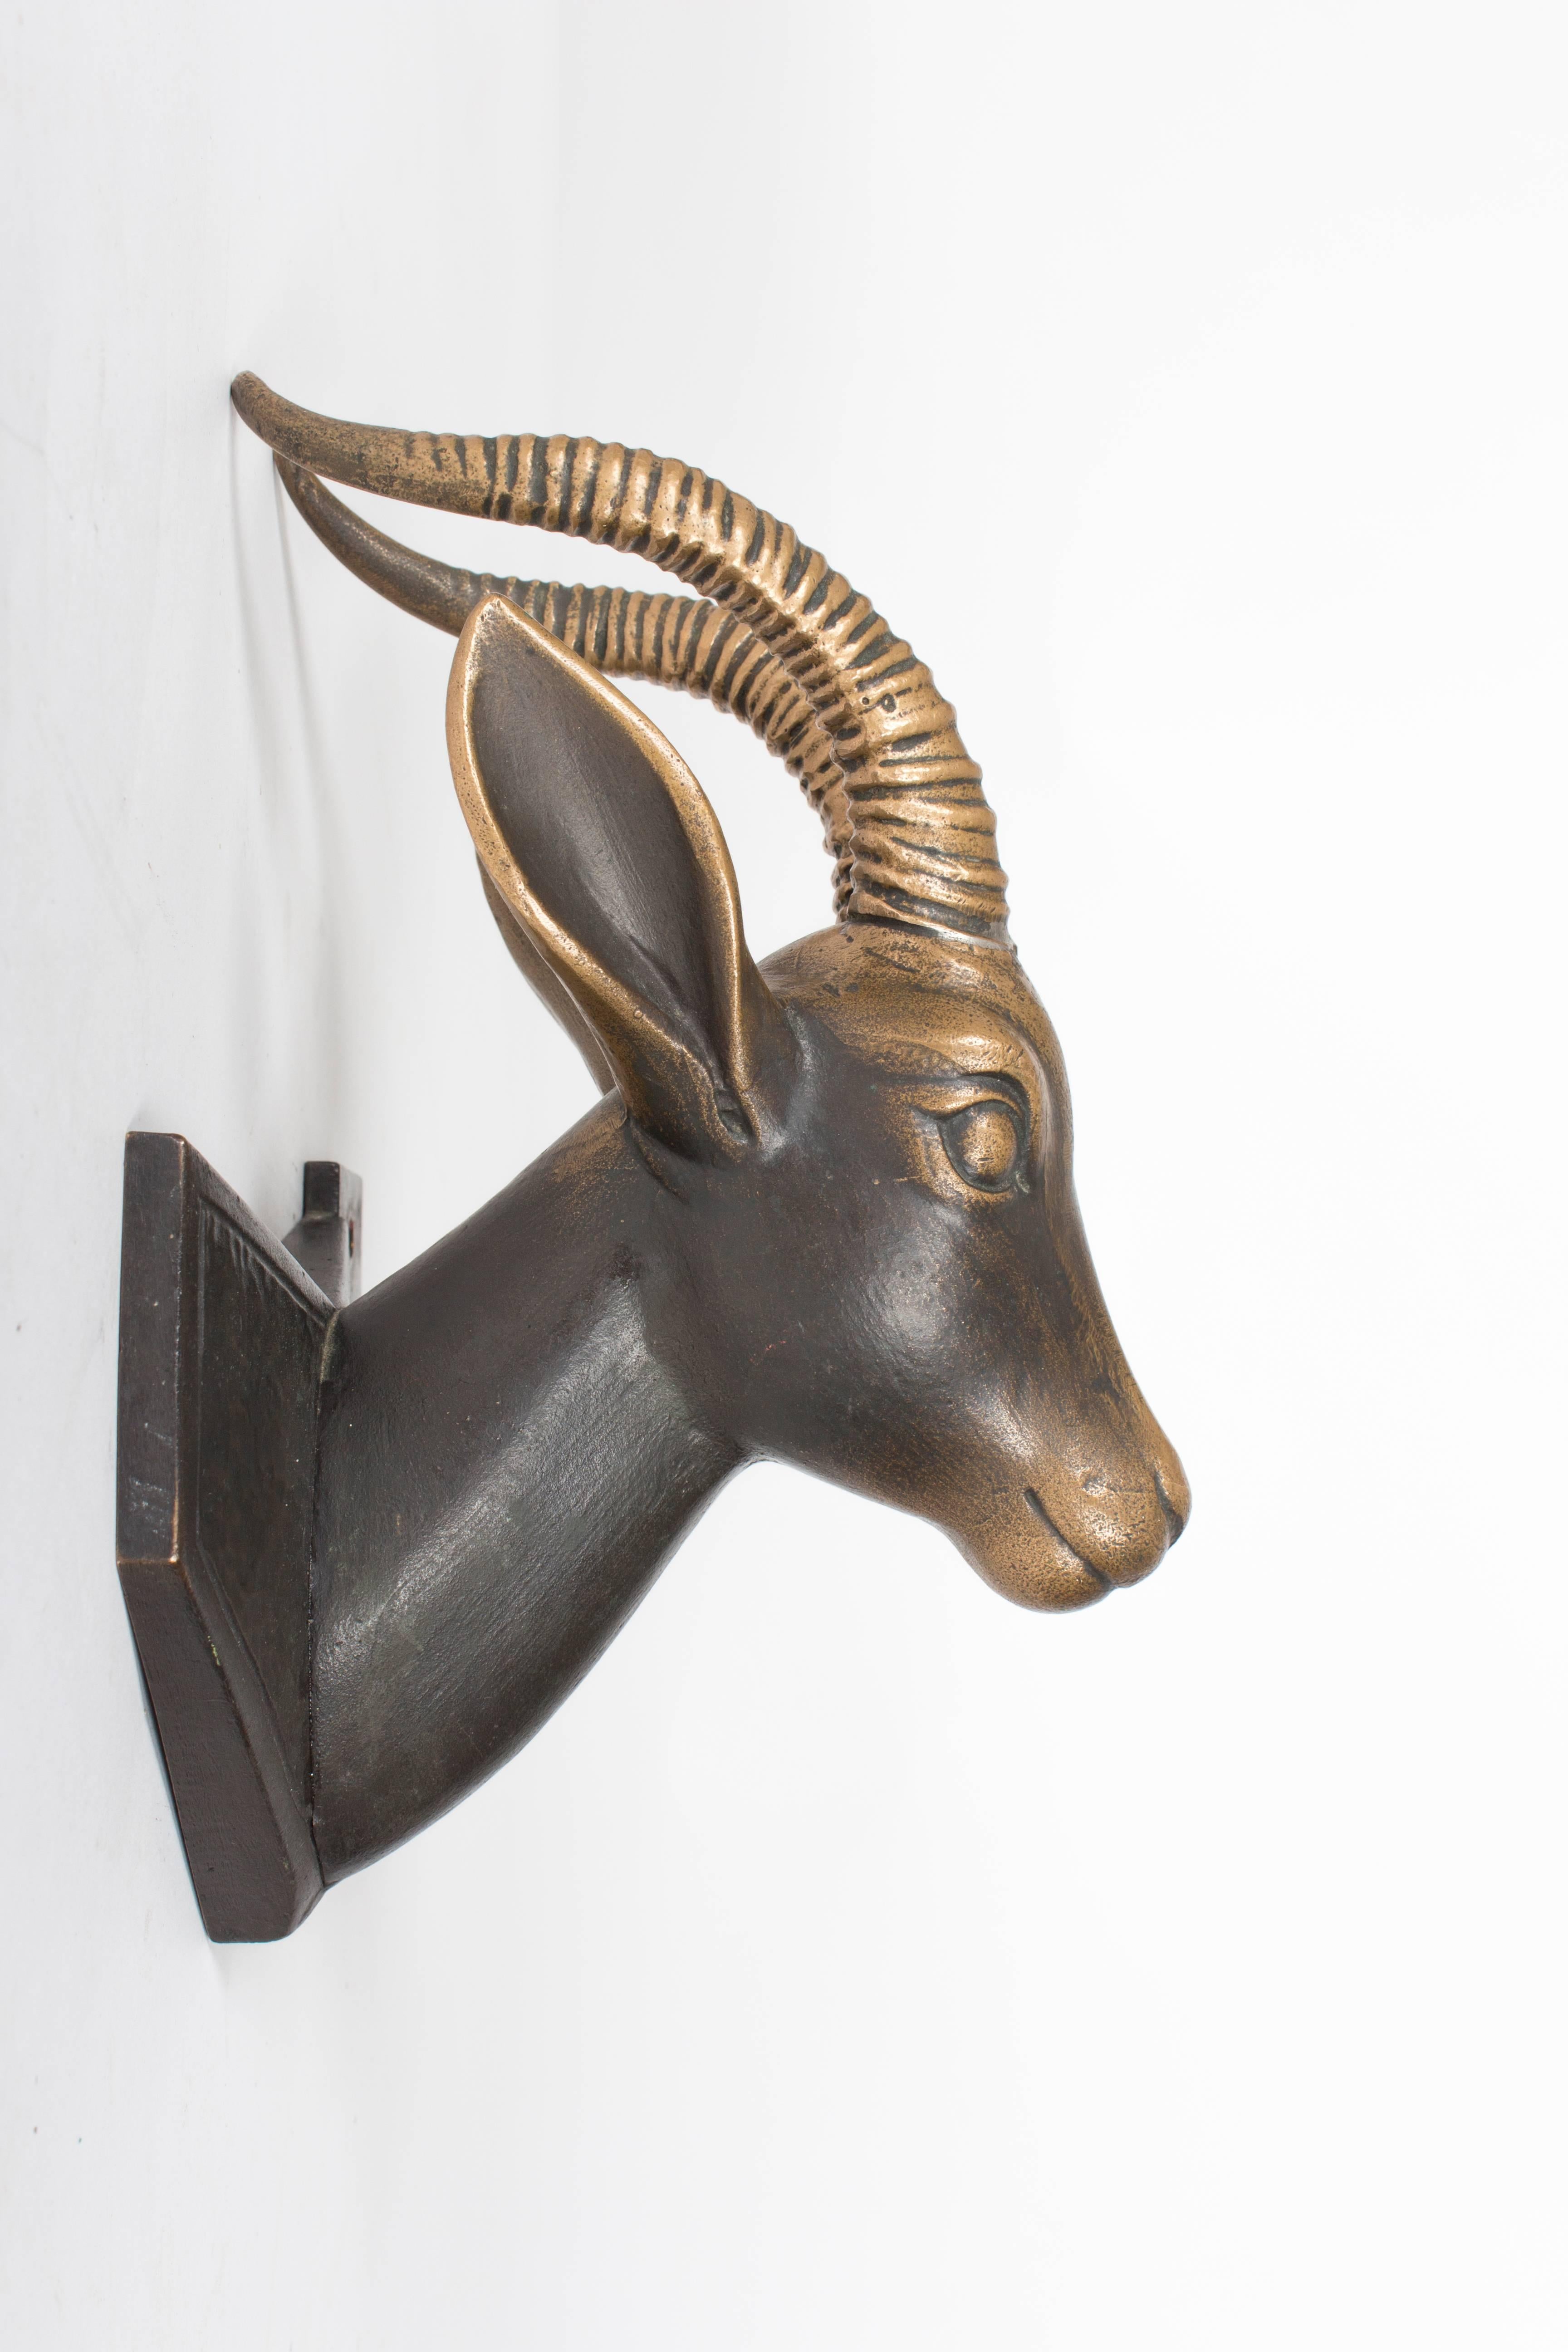 Massive Brass Door Handle Depicting a Gazelle by the Hagenauer Workshop Vienna For Sale 2